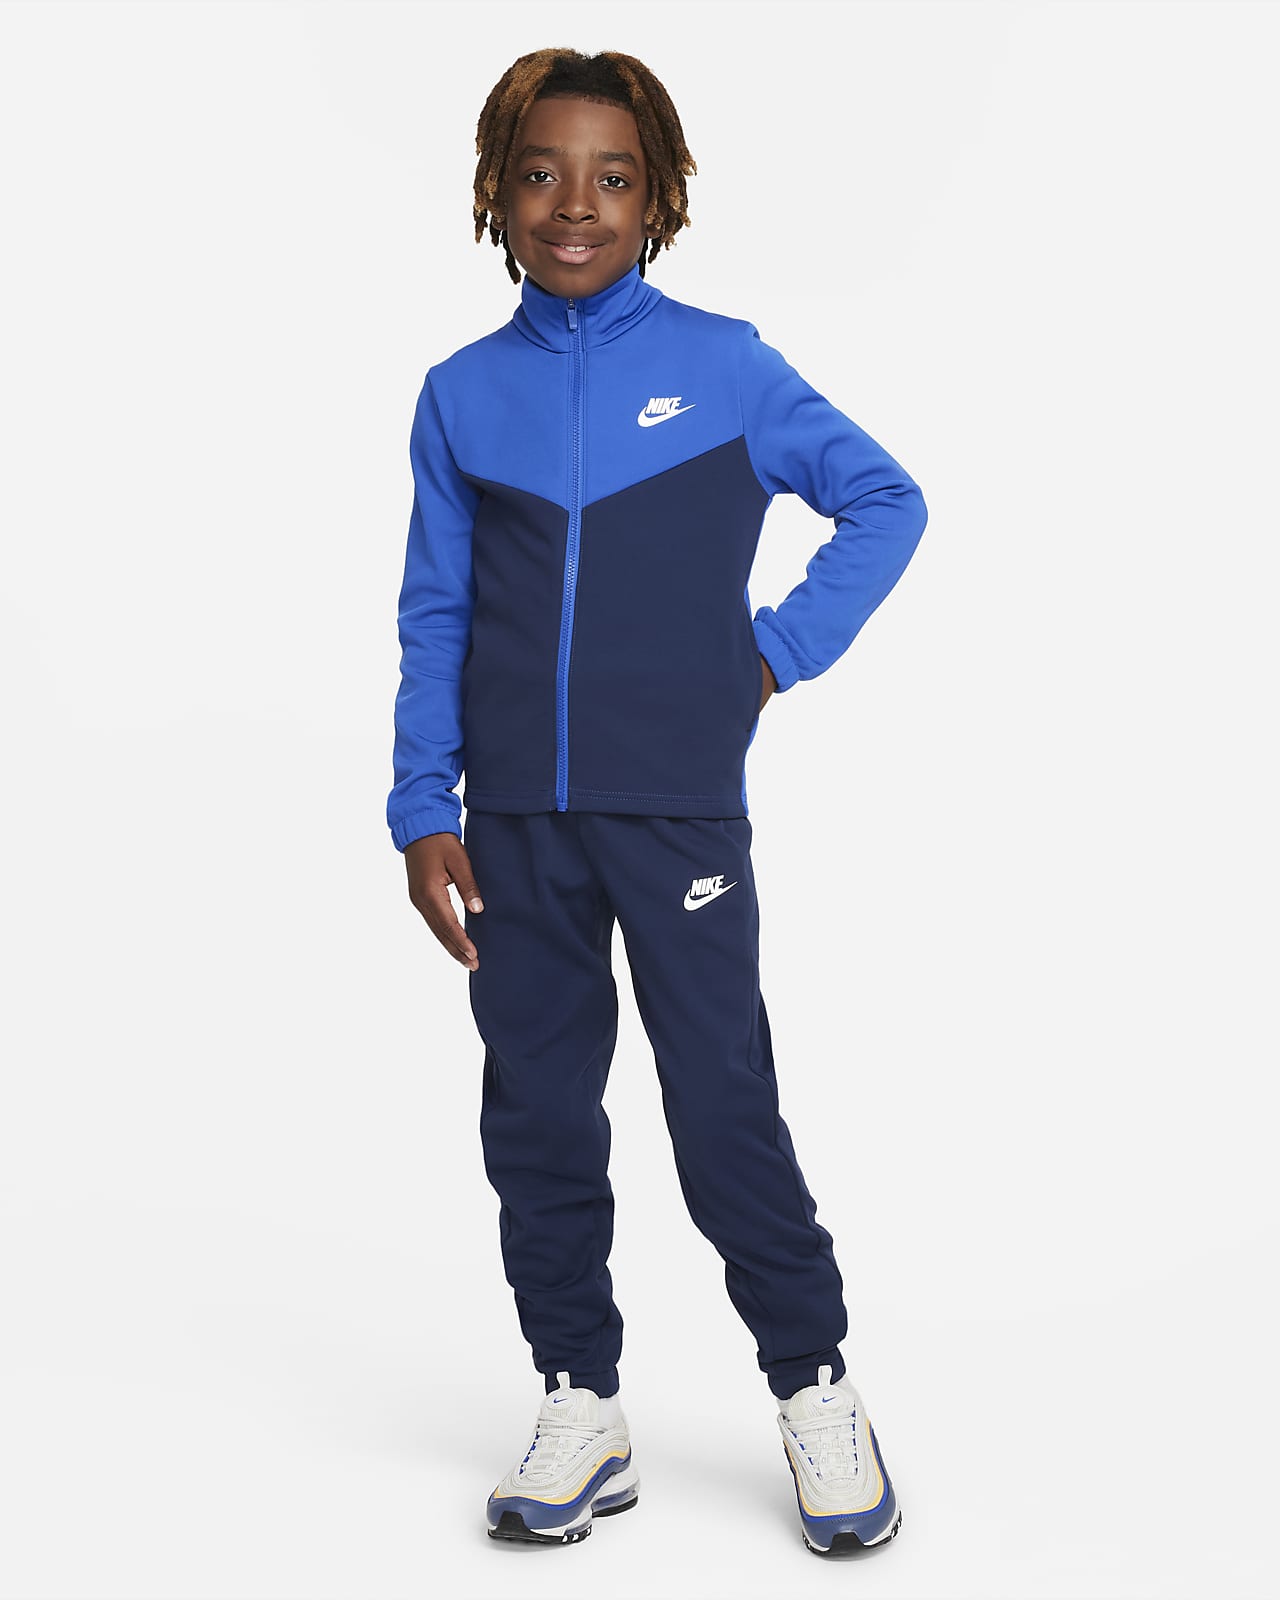 Eigenwijs Tragisch stoom Nike Sportswear Trainingsanzug für ältere Kinder. Nike DE